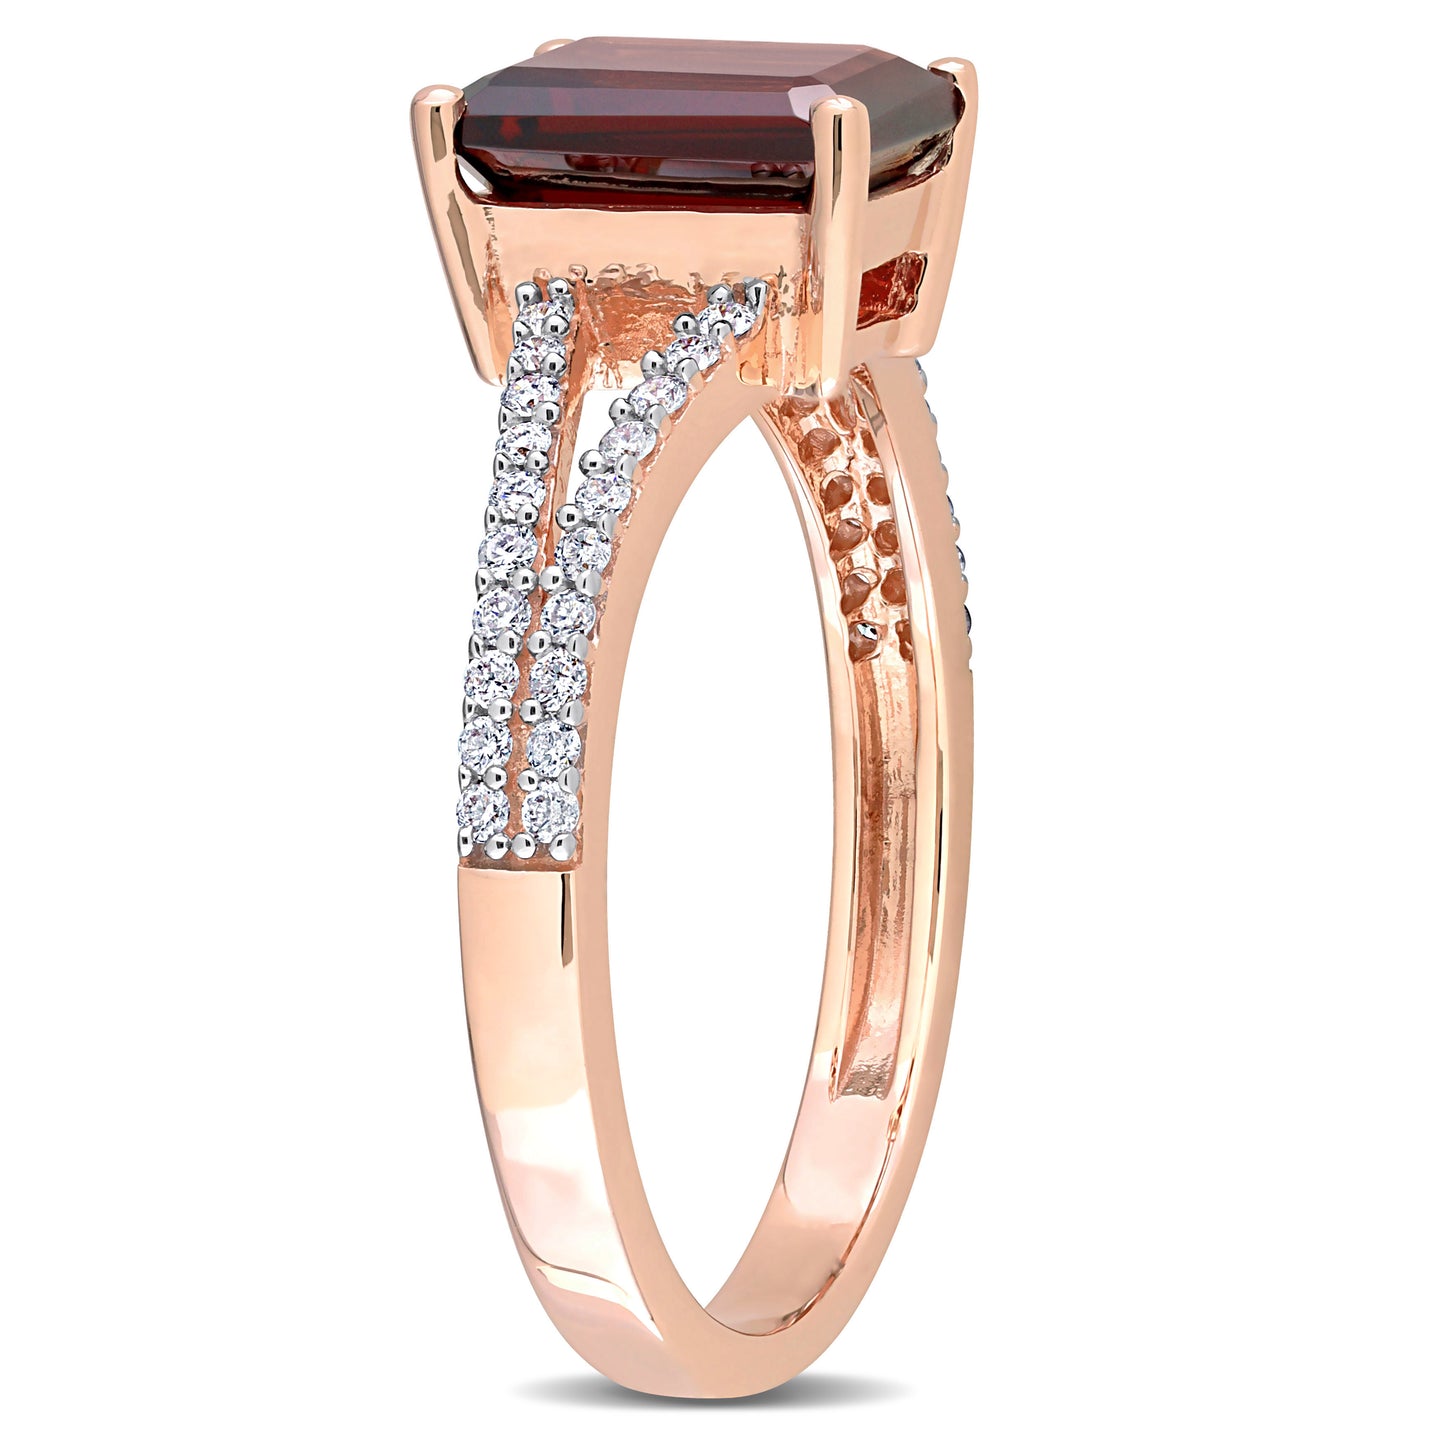 Garnet & Diamond Emerald Cut Ring in 14k Rose Gold